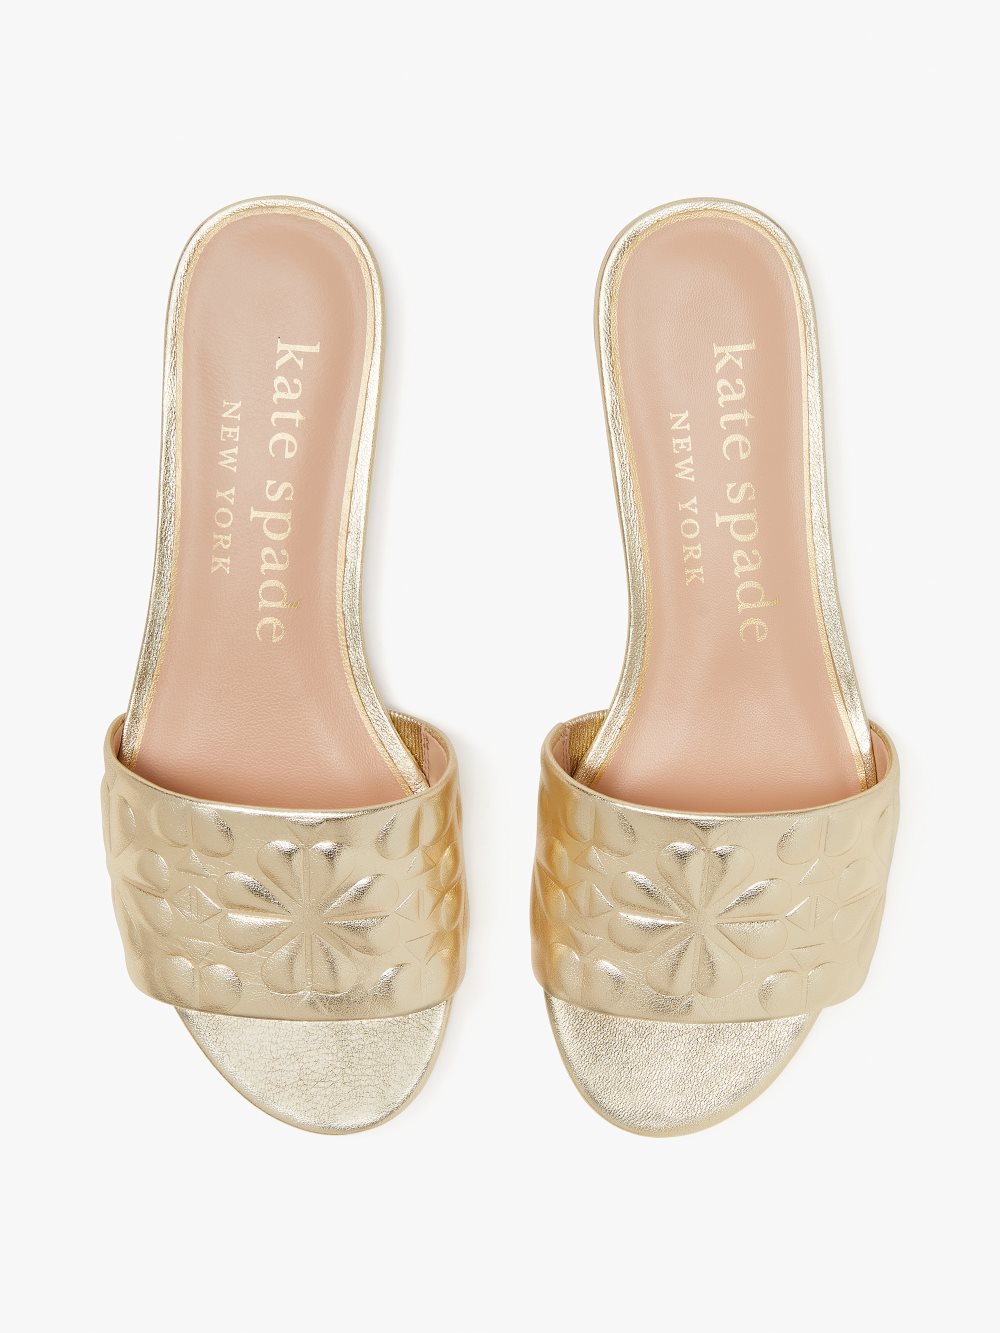 Women's pale gold emmie slide sandals | Kate Spade